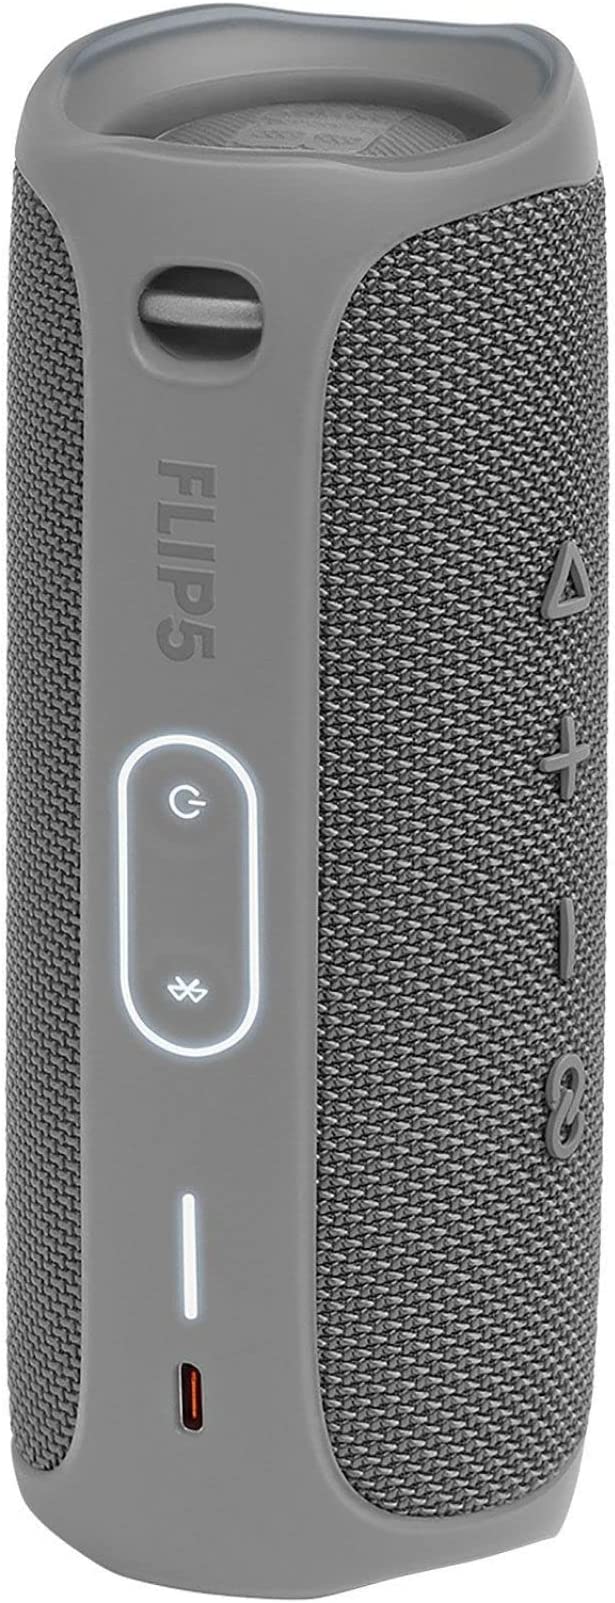 JBL Flip 5 Portable Bluetooth Speaker JBLFLIP5GRYAM - Gray Stone Like New